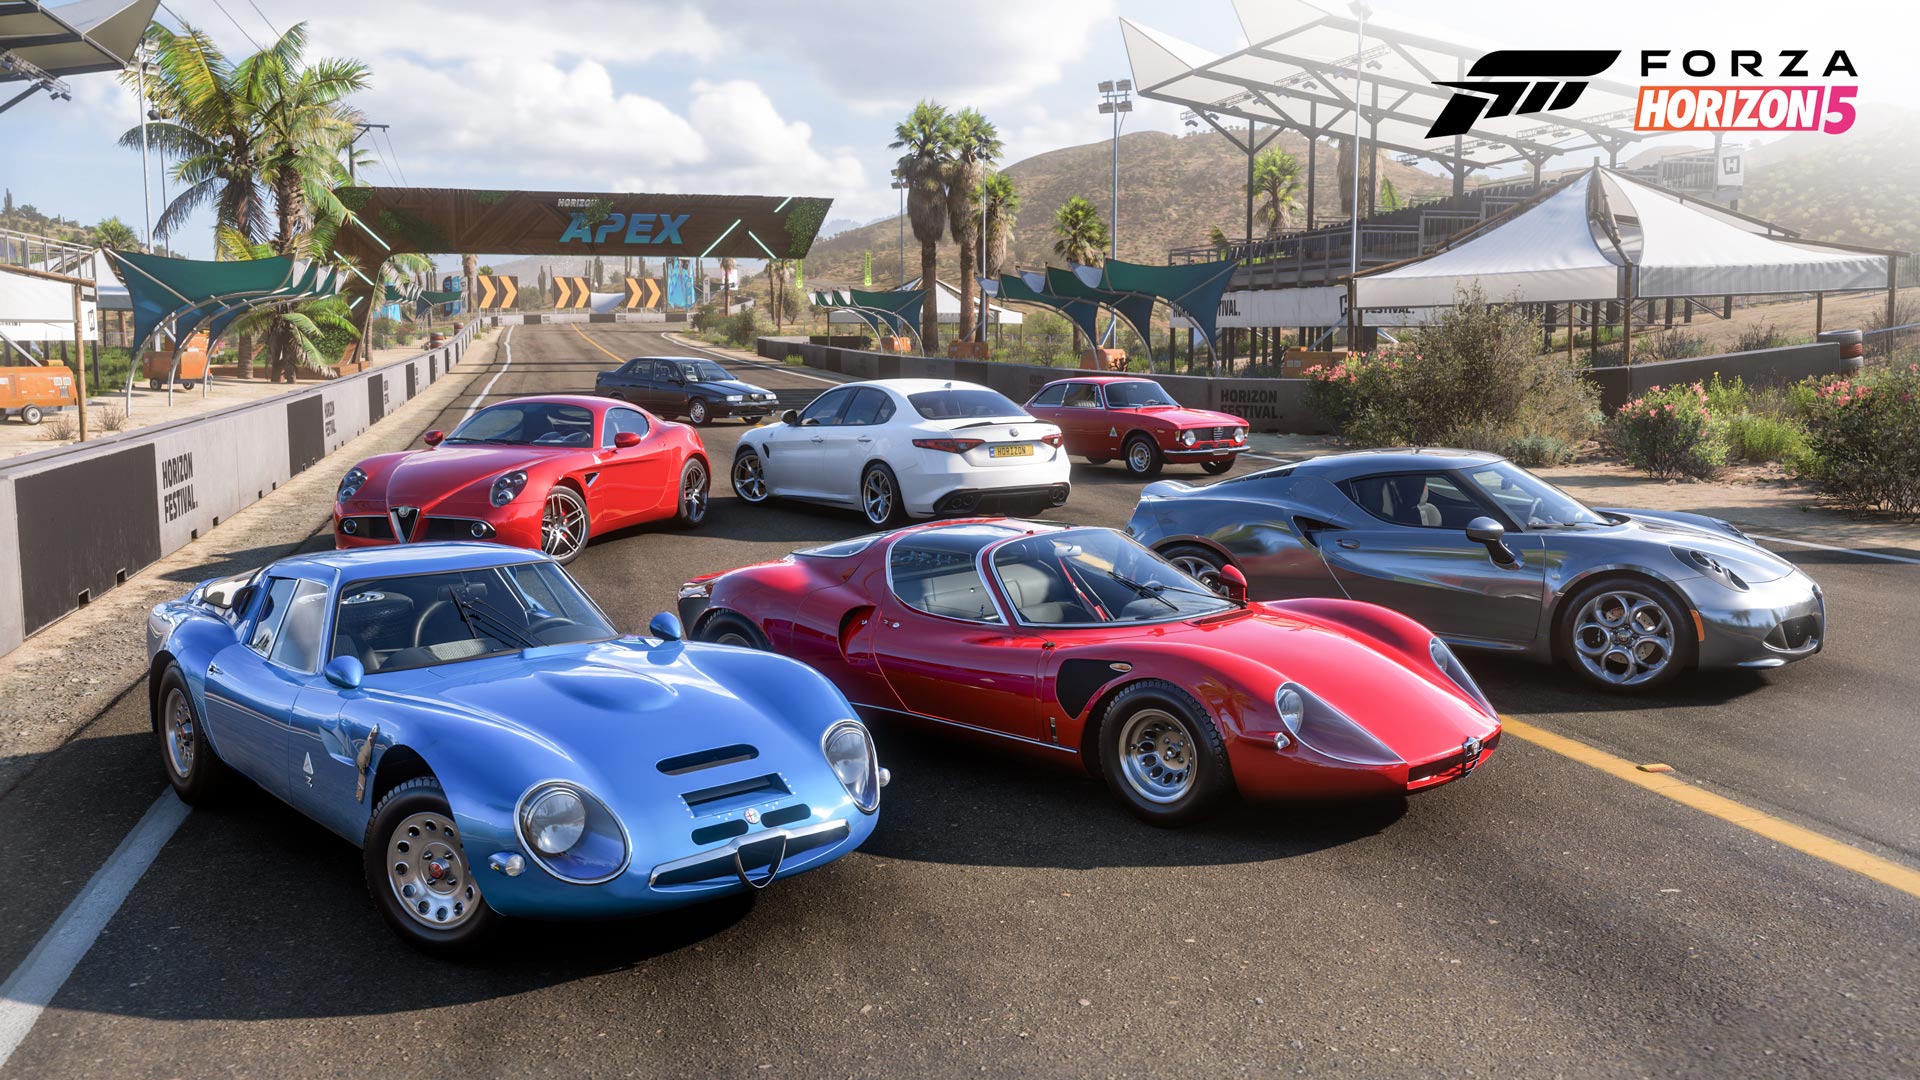 Forza Horizon 5 ‘Italian Automotive’ update brings 23 cars, doubles Garage limits